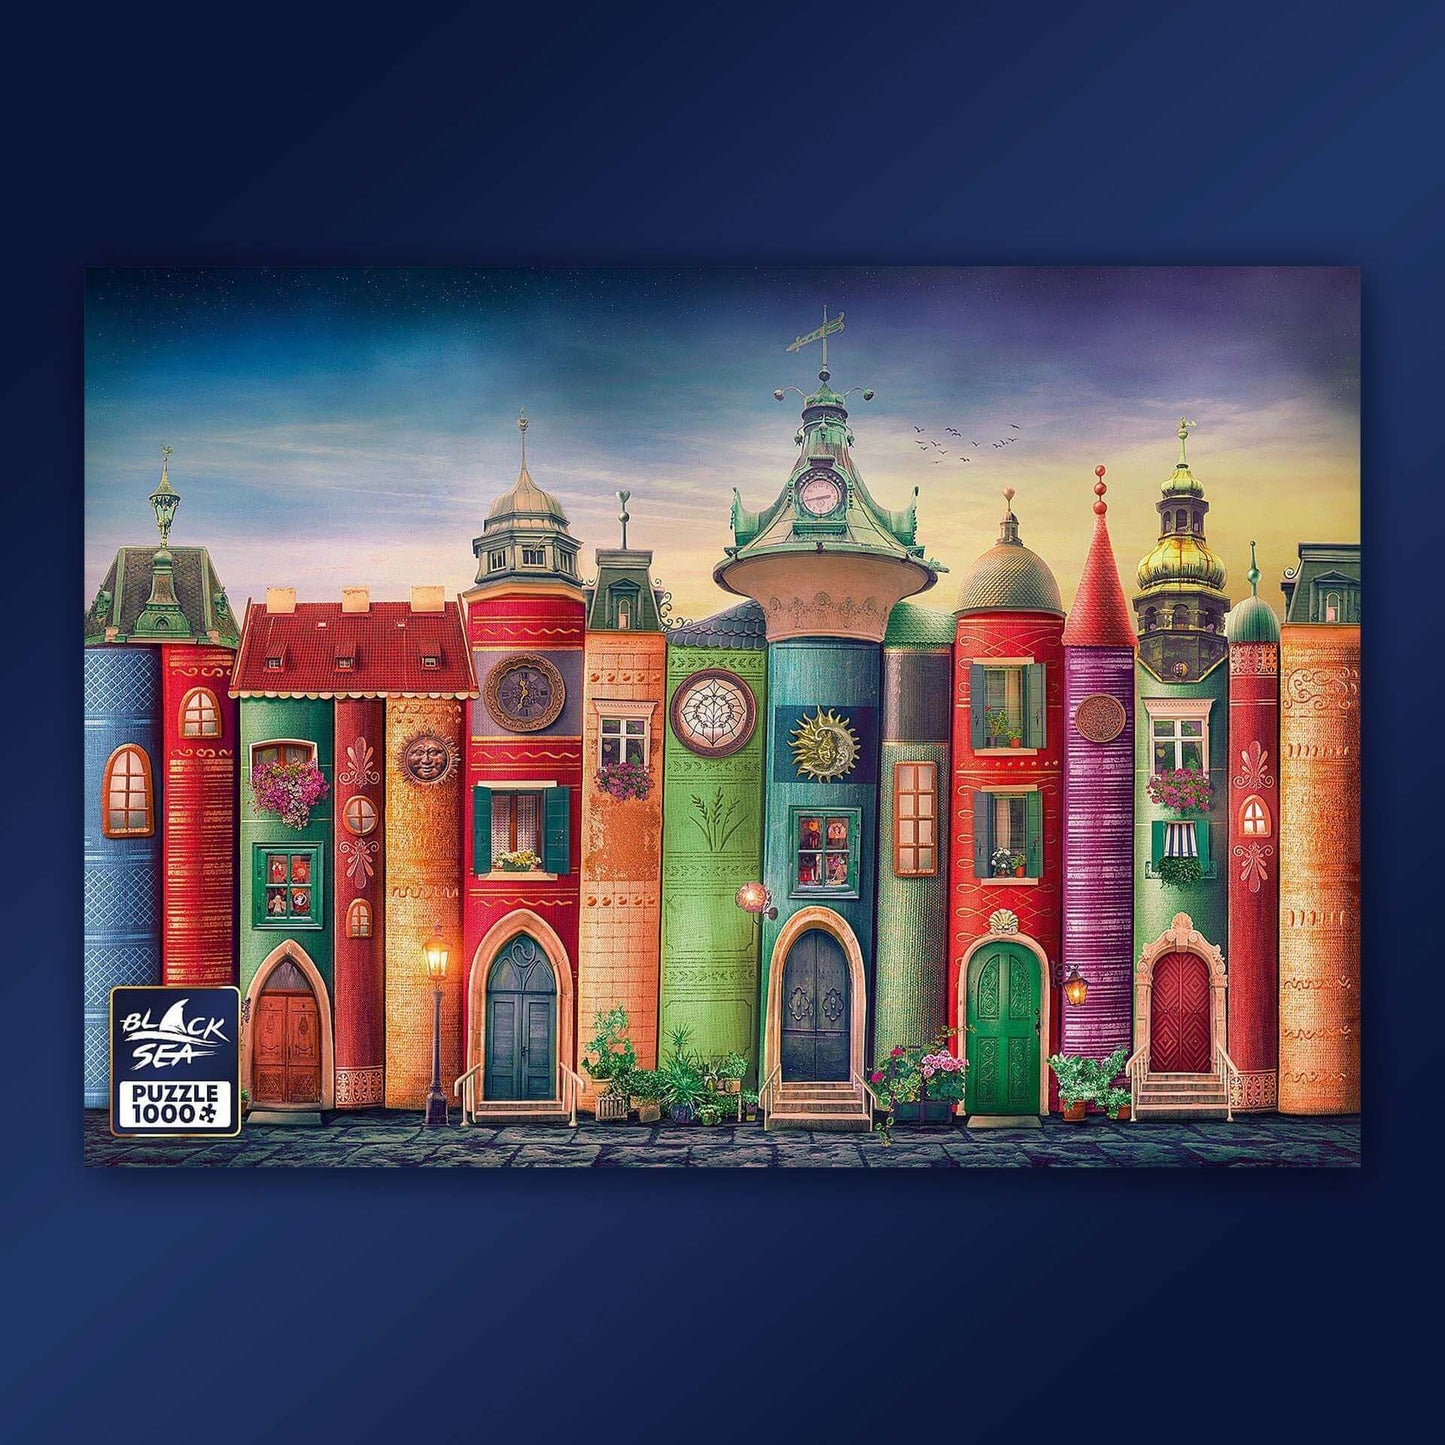 Puzzle Black Sea 1000 pieces - The City of Books